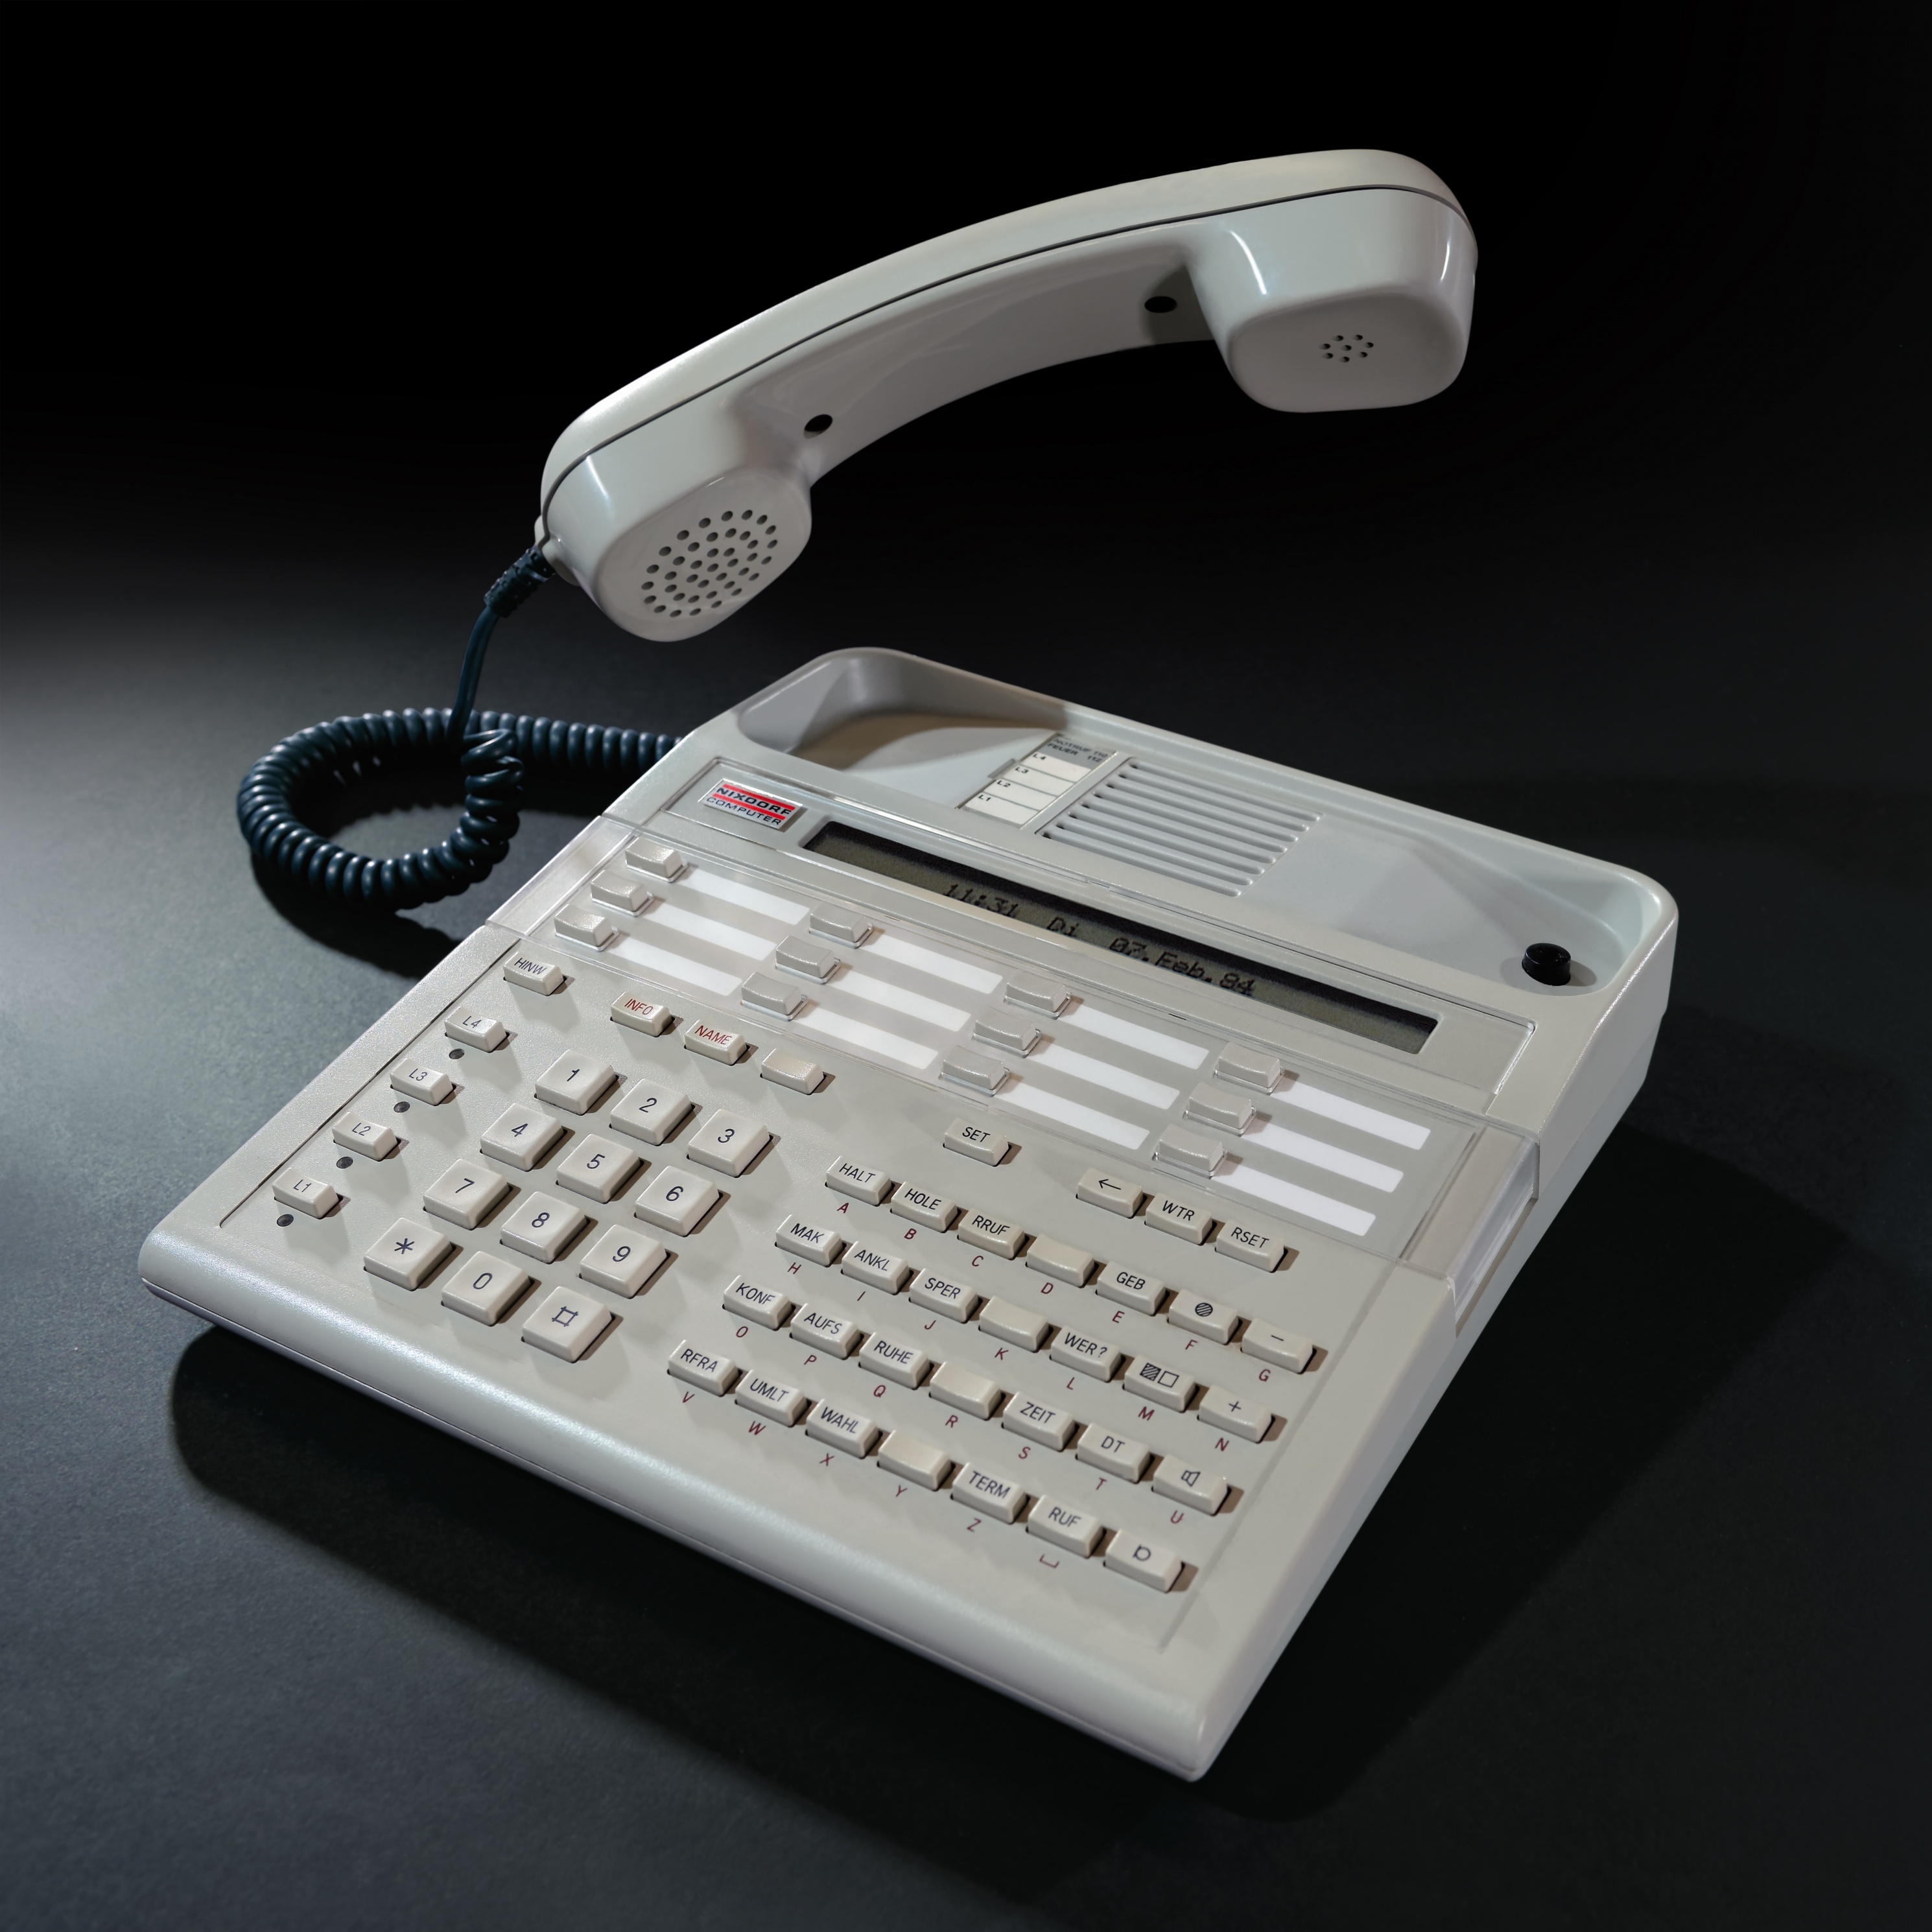 Nixdorf ISDN-System 8818 Digifon Komfort 21 (Heinz Nixdorf MuseumsForum CC BY-NC-SA)